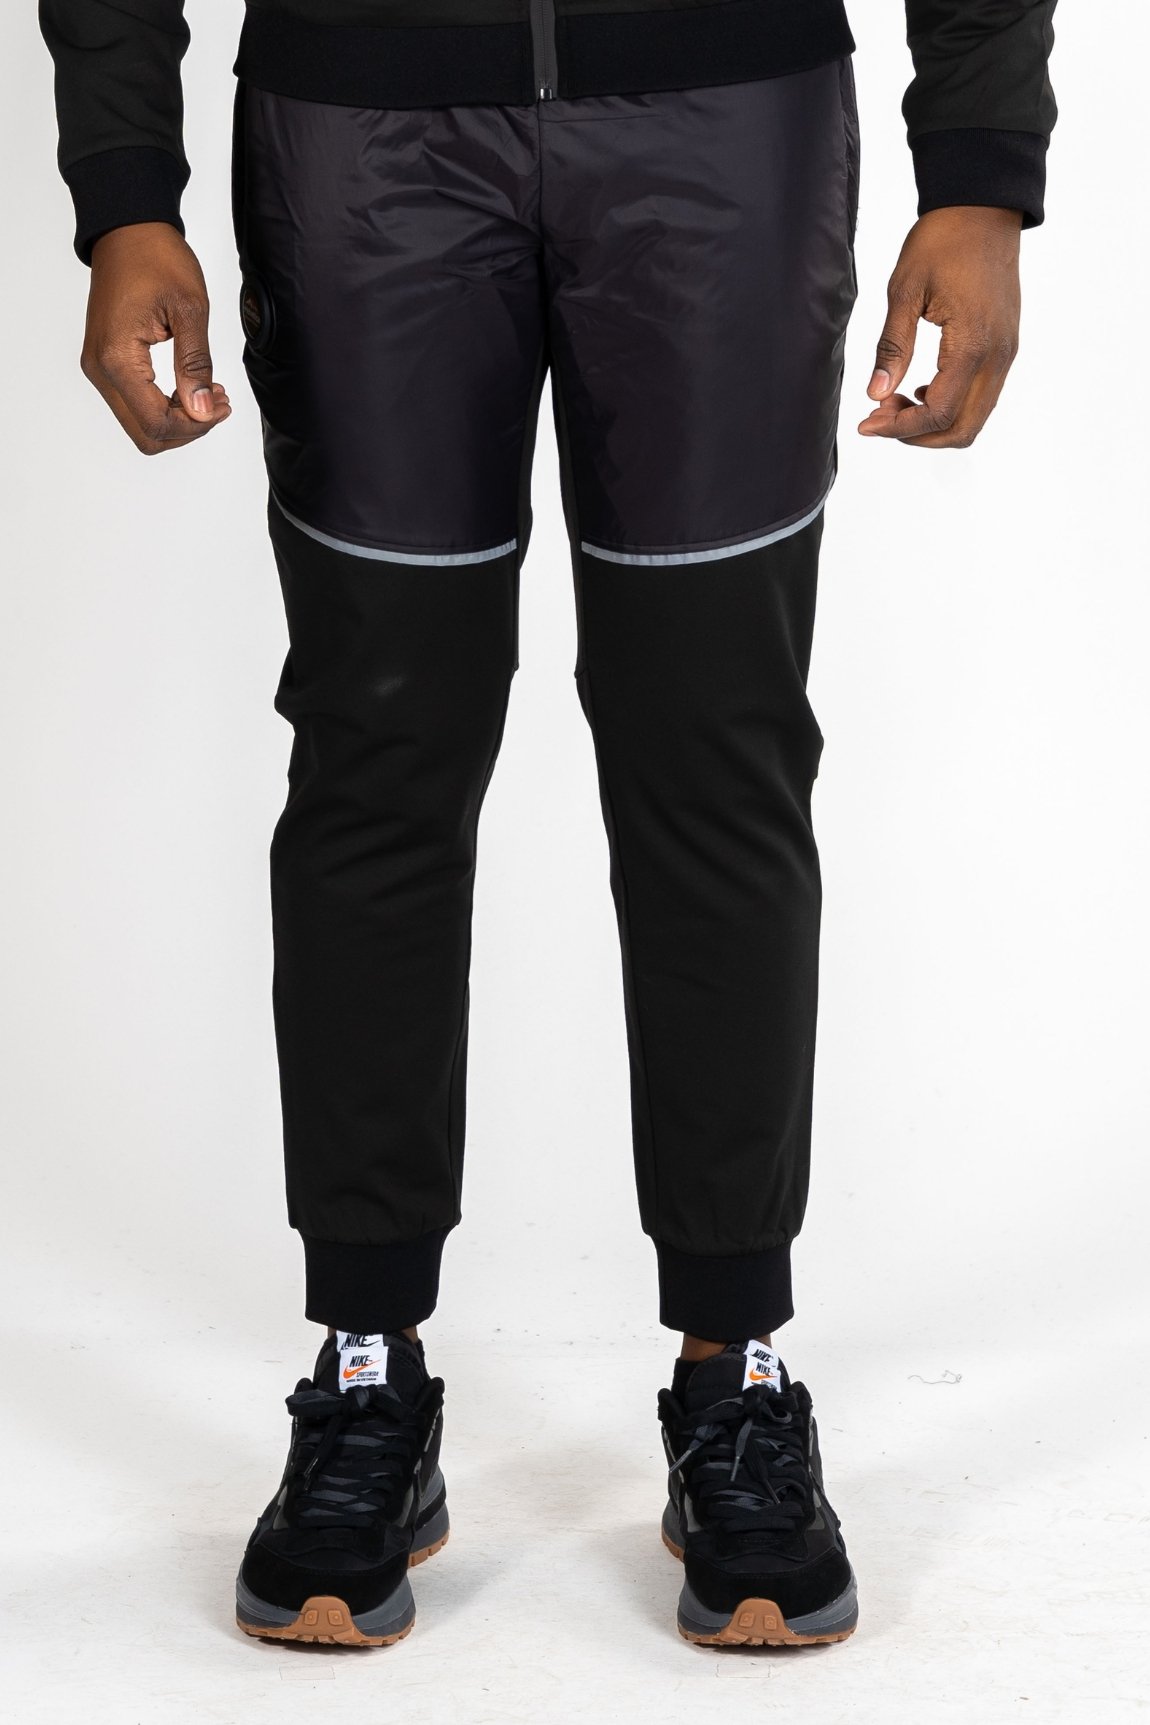 Pantalons sport/streetwear  Helvetica DODGE BLACK